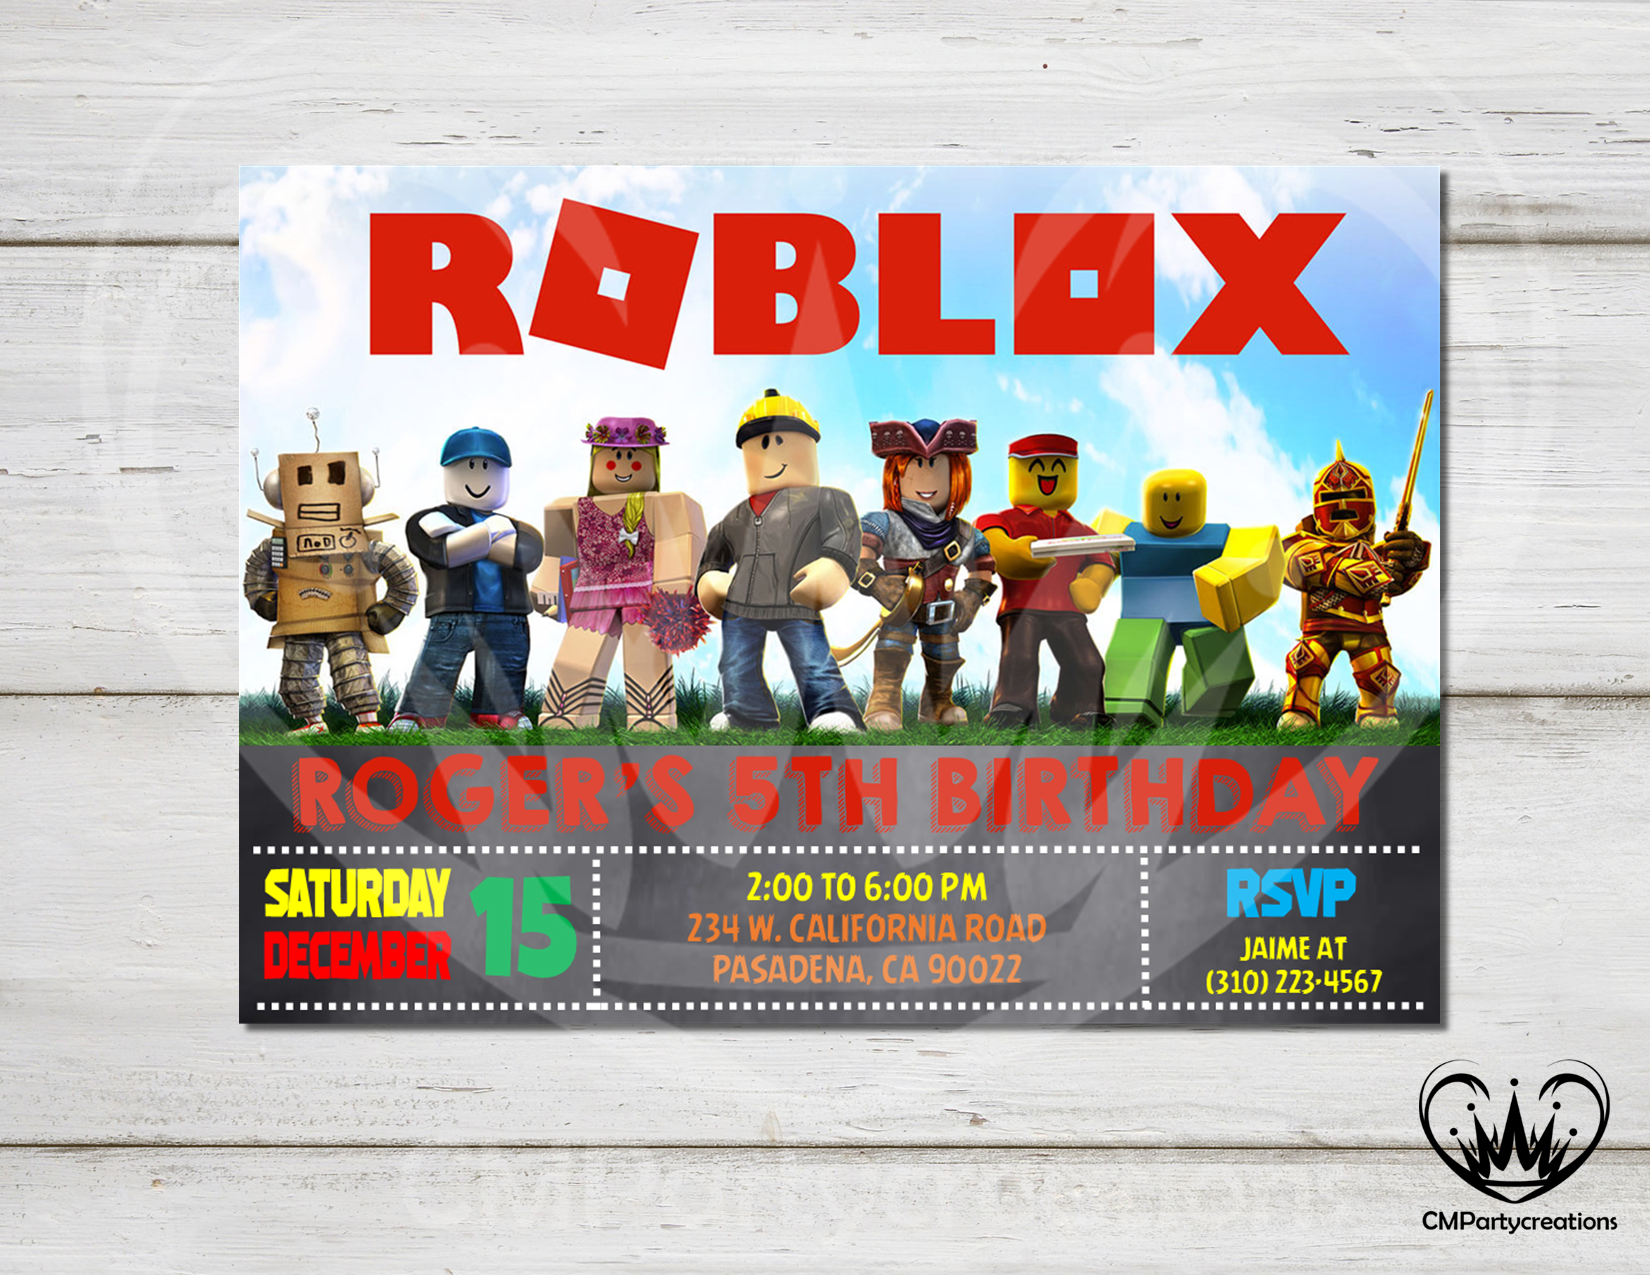 Roblox Group Invitation Birthday Party Cmpartycreations - roblox birthday party 2